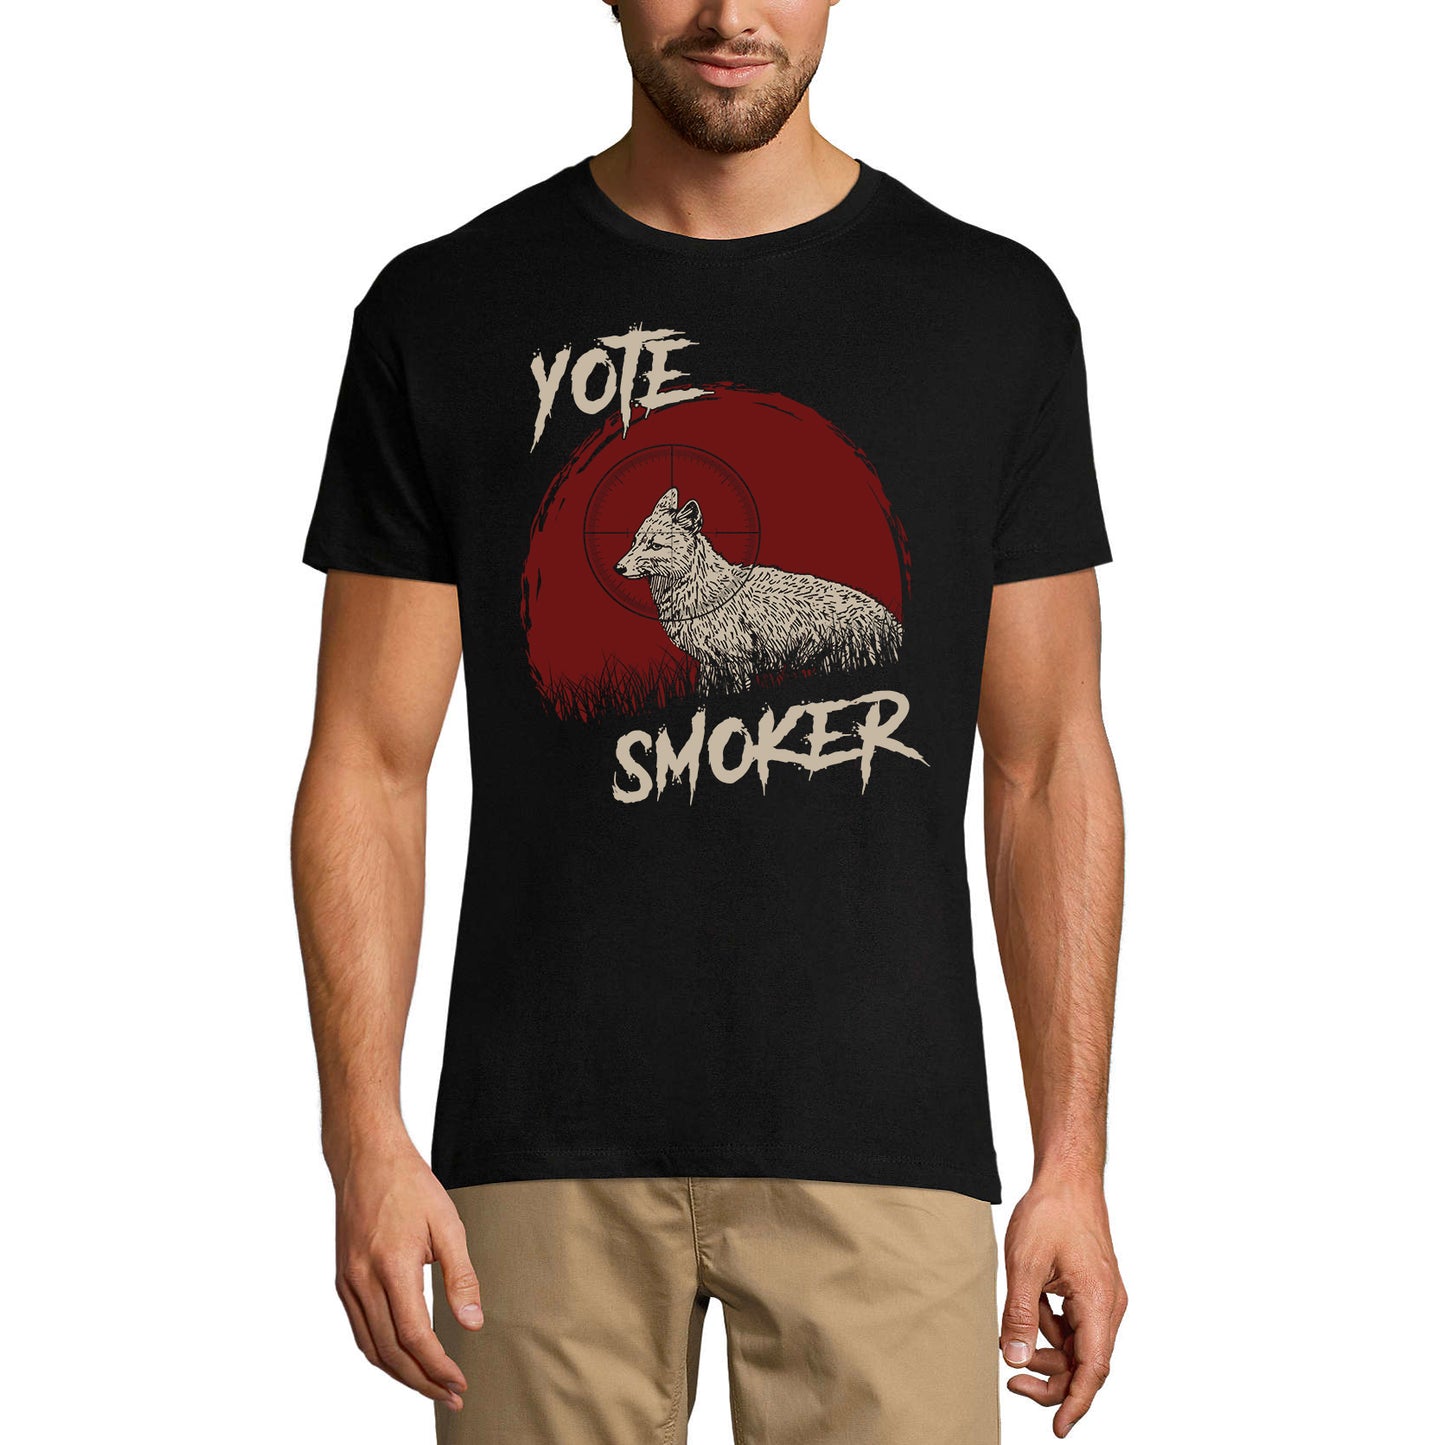 ULTRABASIC Graphic Men's T-Shirt Yote Smoker - Funny Hunting Tee Shirt